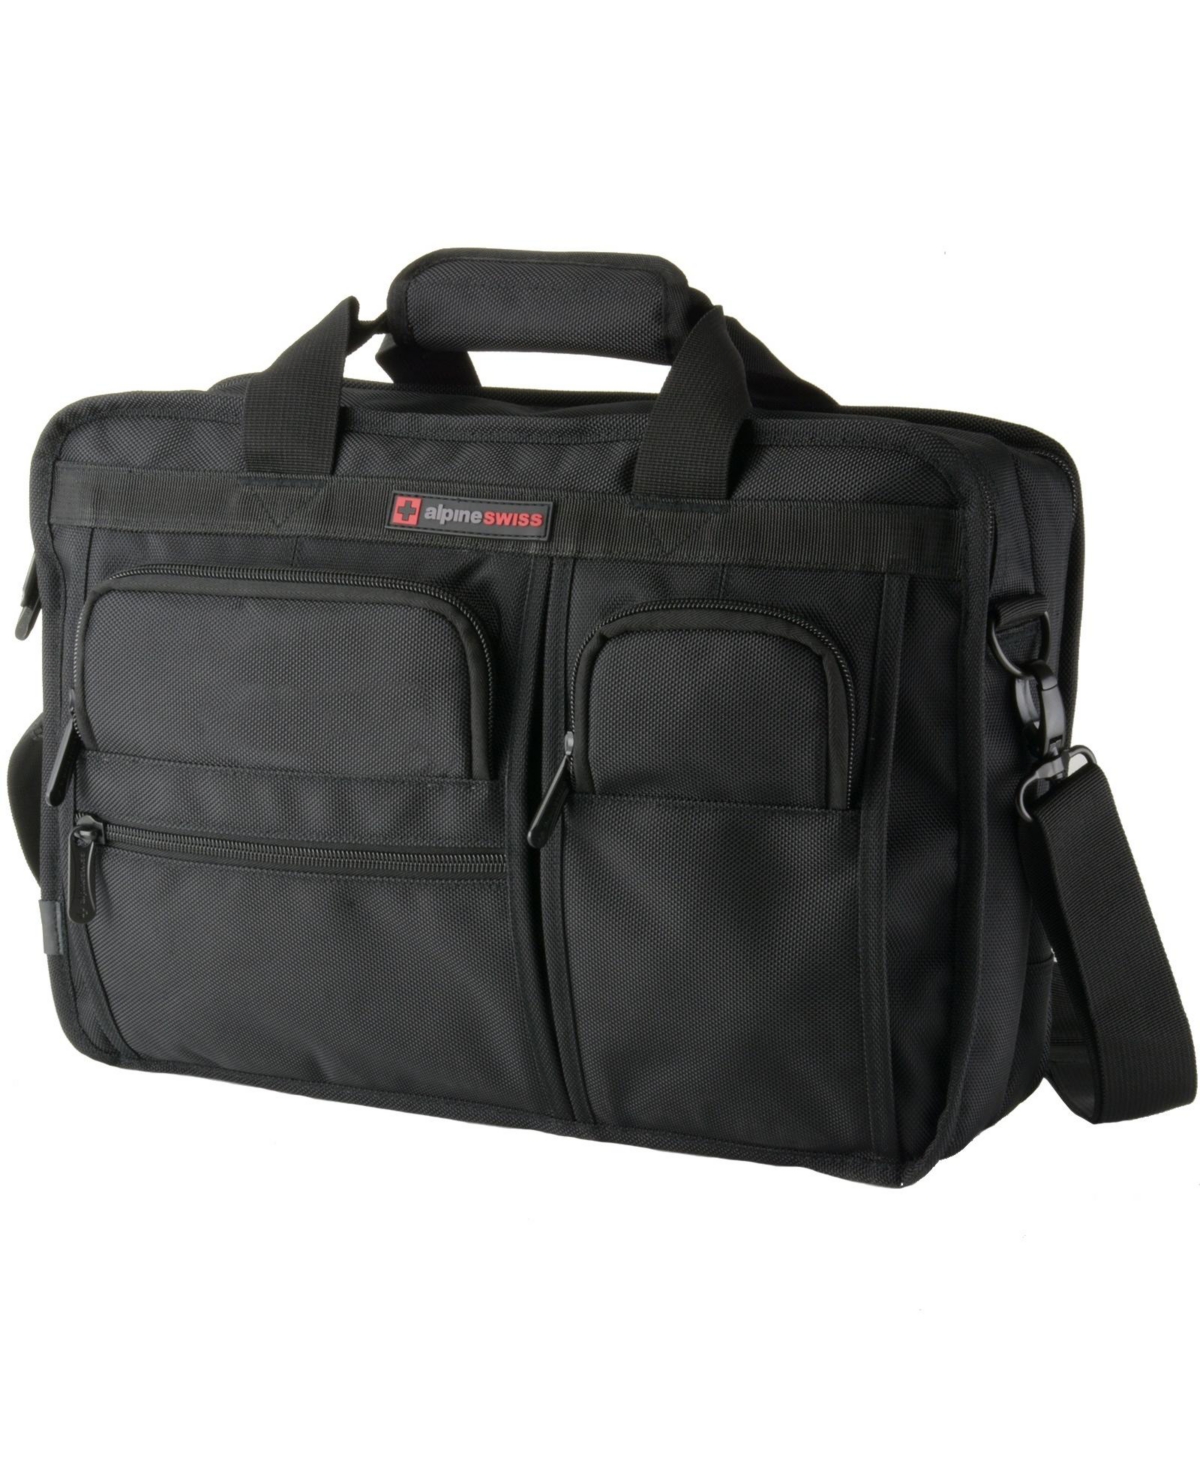 Conrad Messenger Bag 15.6 Inch Laptop Briefcase with Tablet Sleeve - Black